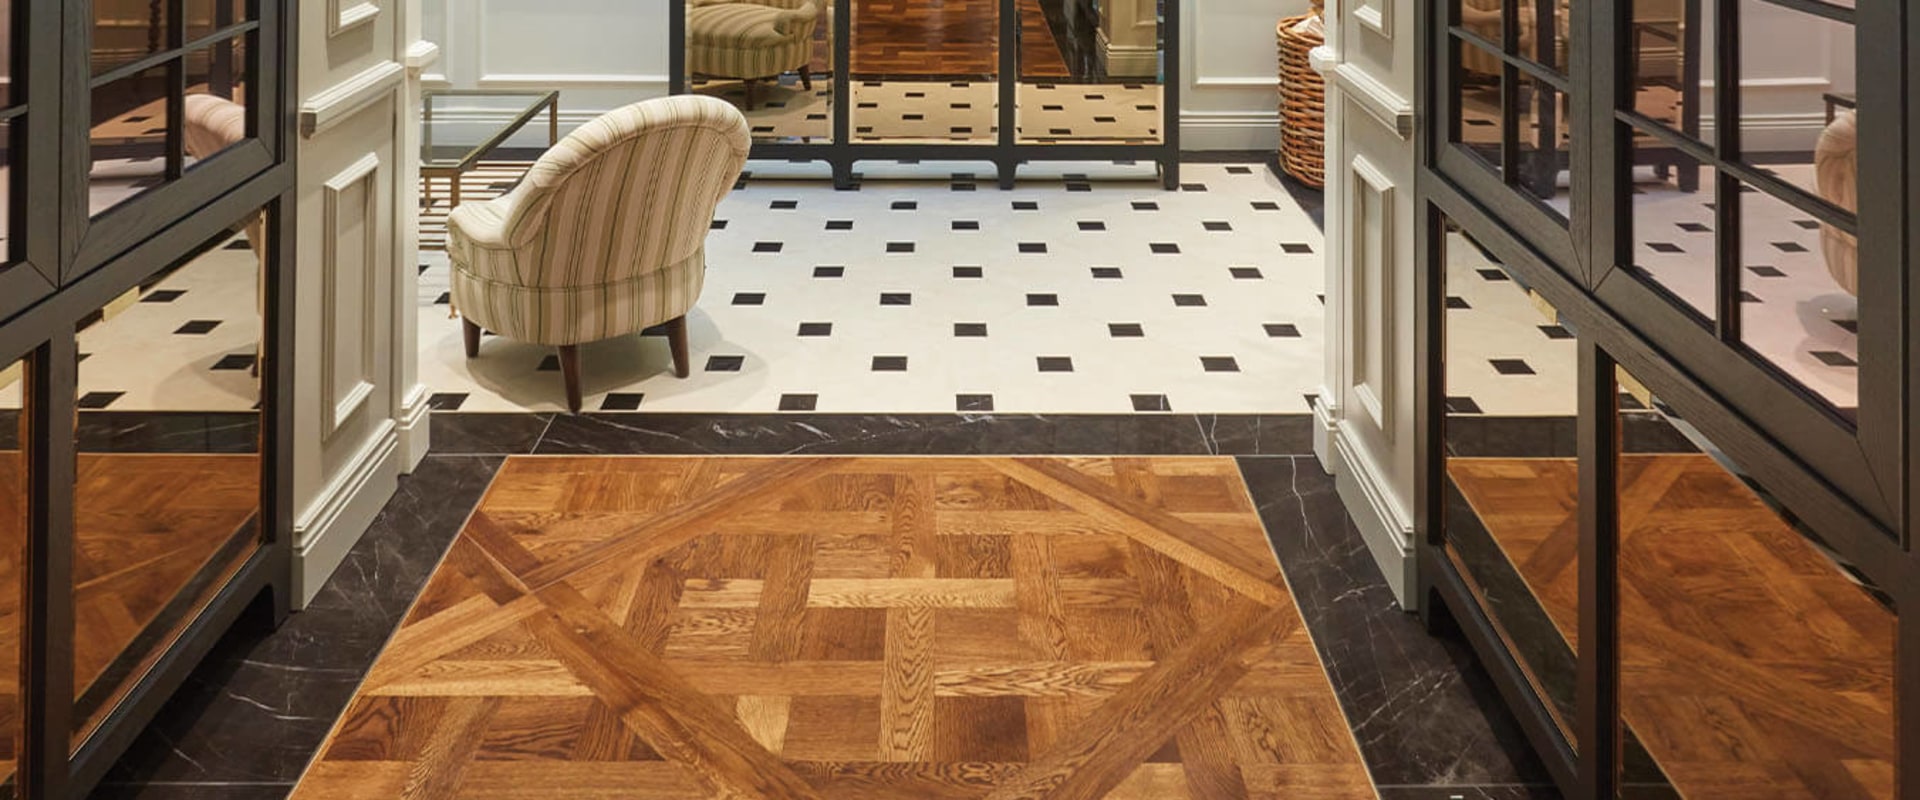 Design Trends for Wooden Flooring in the UK